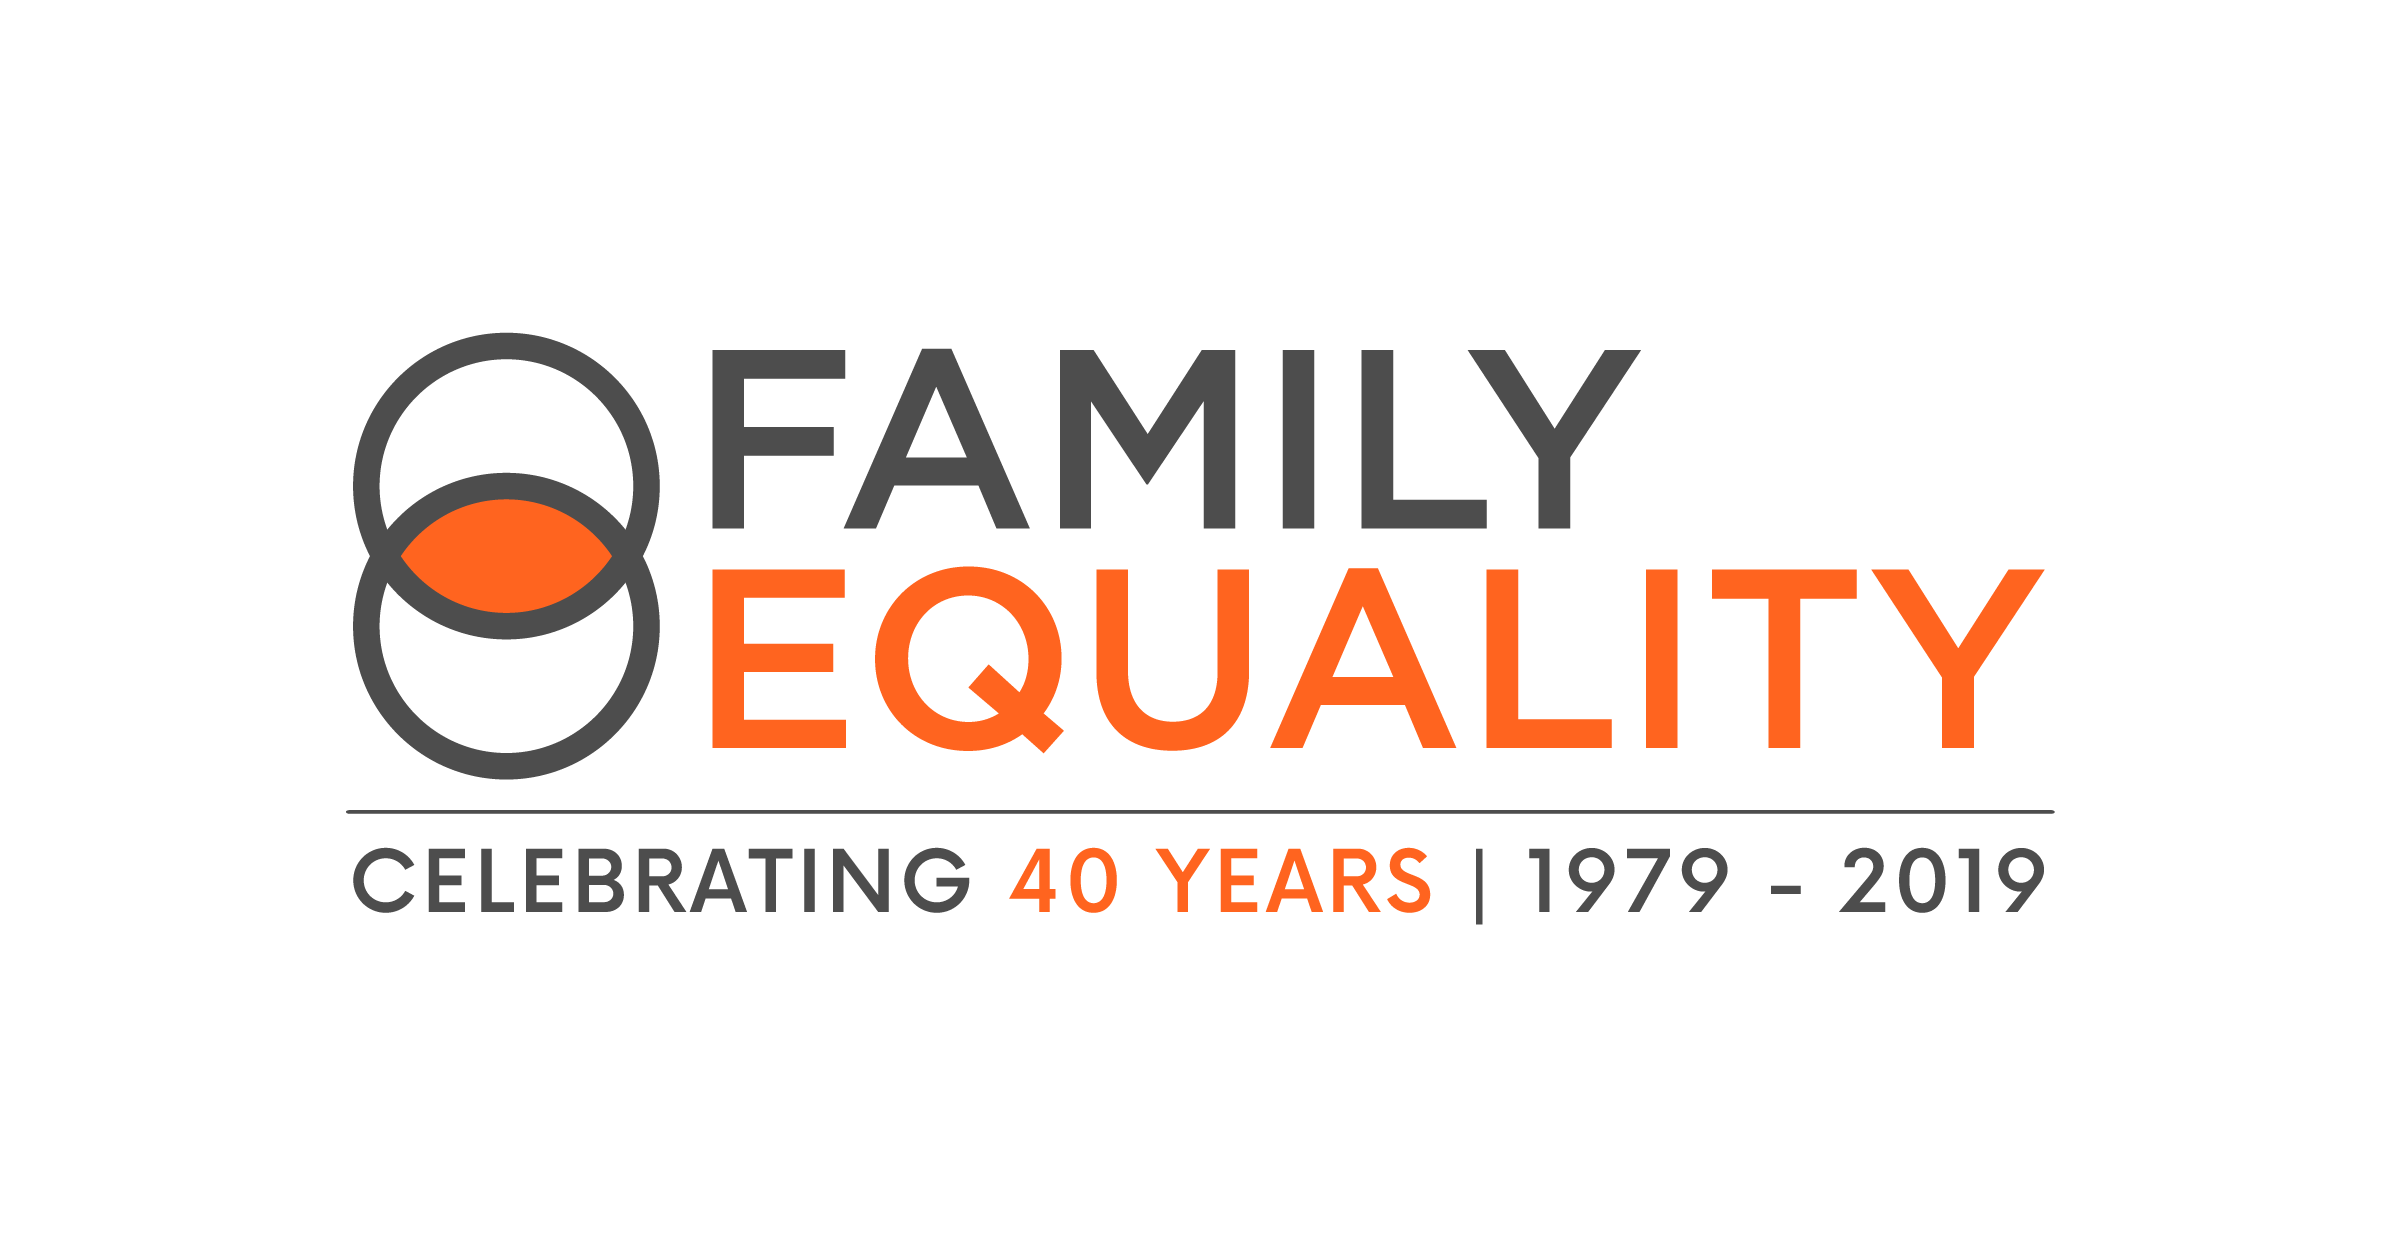 Family Equality - Celebrating 40 Years